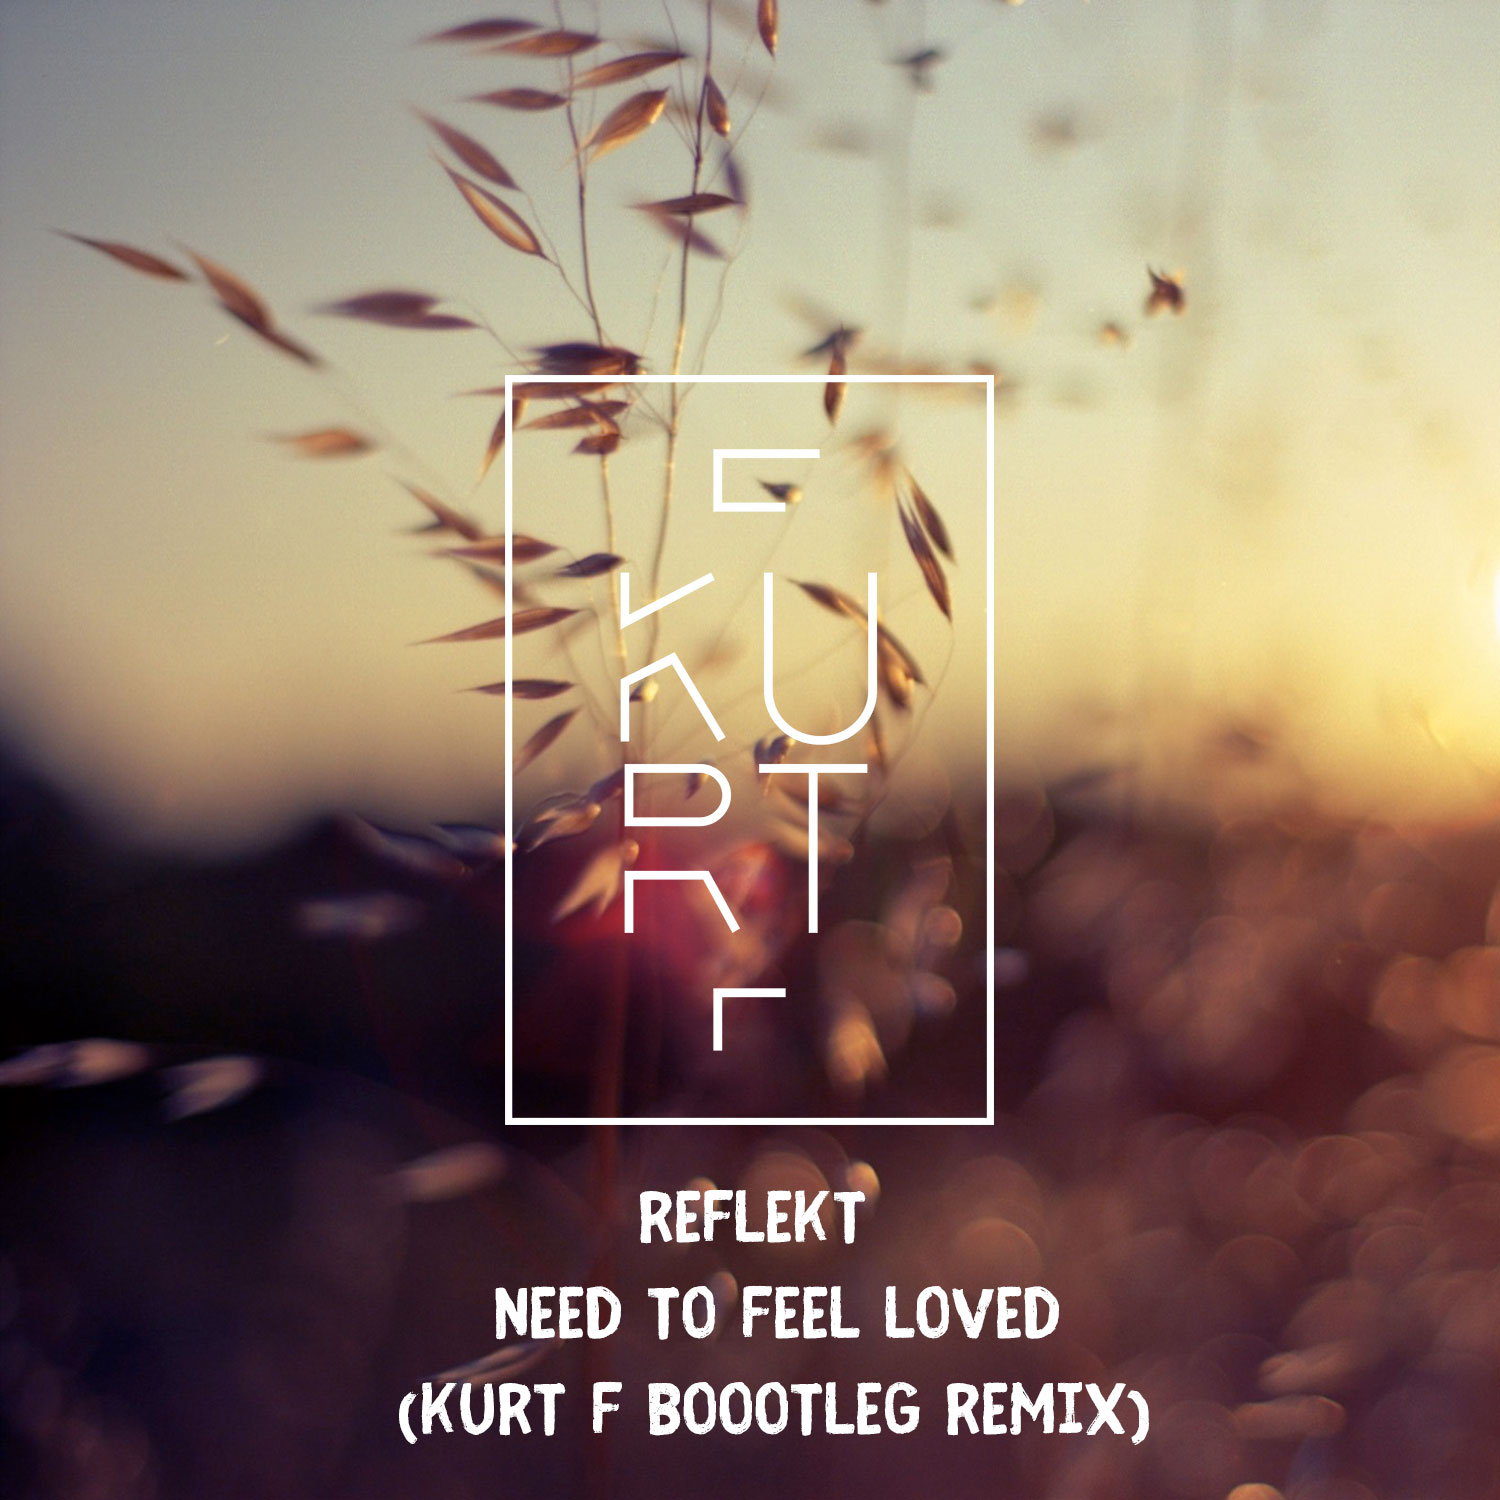 Reflekt - Need to feel loved (Kurt F Bootleg Remix)